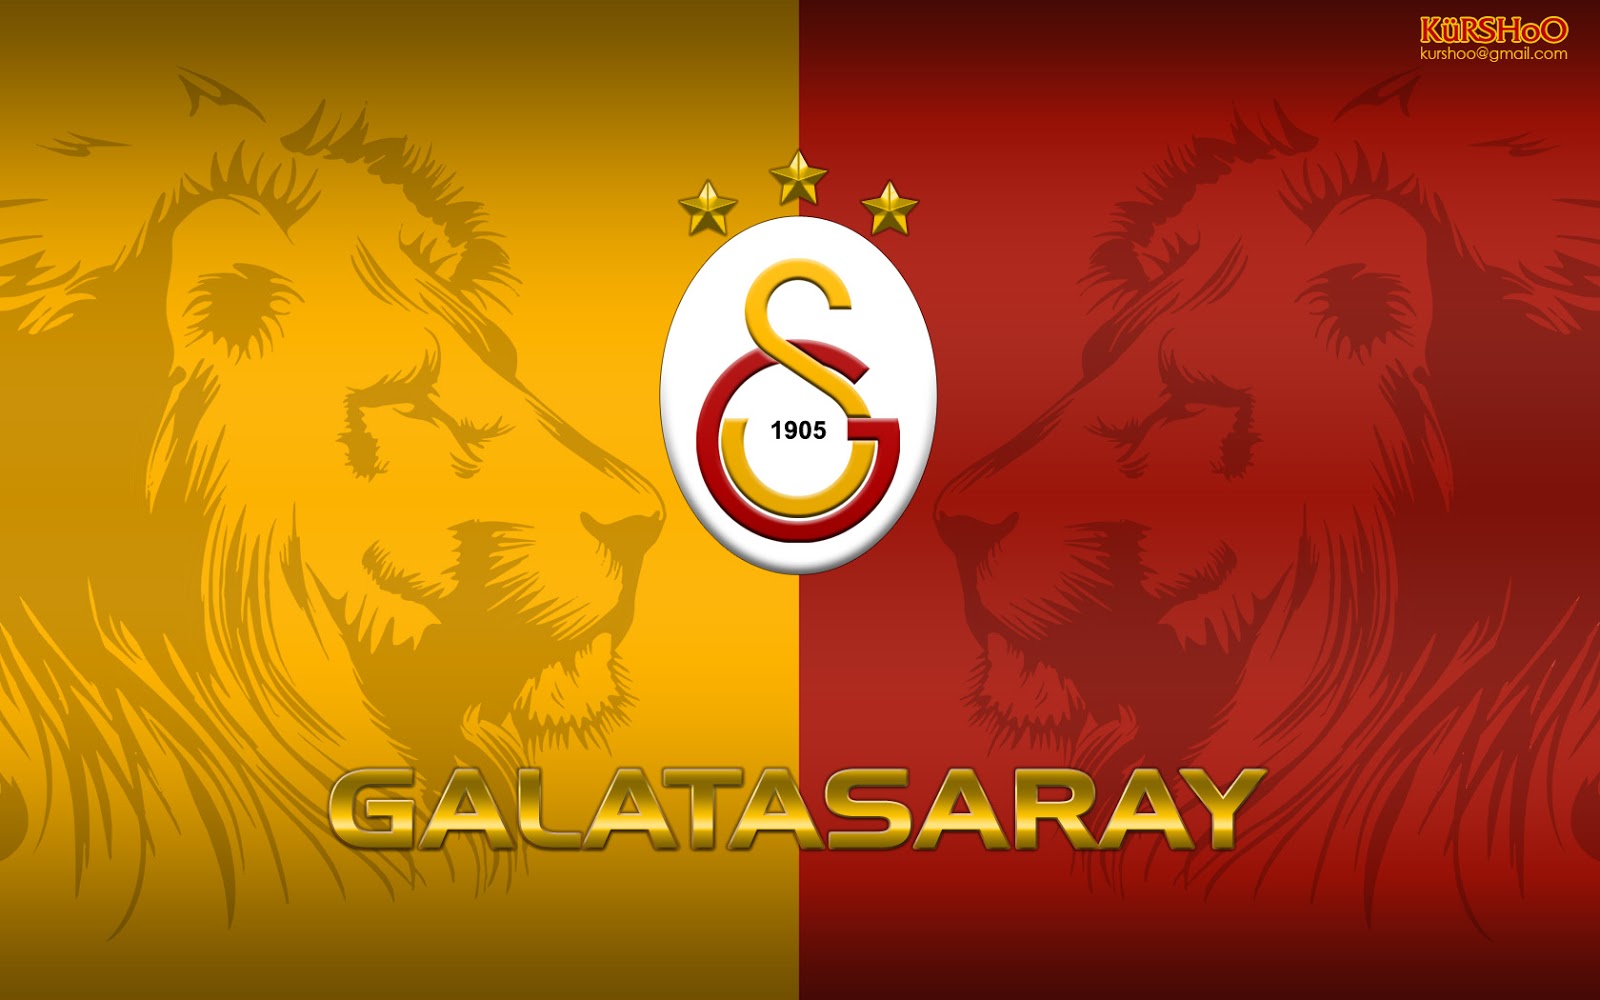  Galatasaray  wallpapers  HD 2012 2013